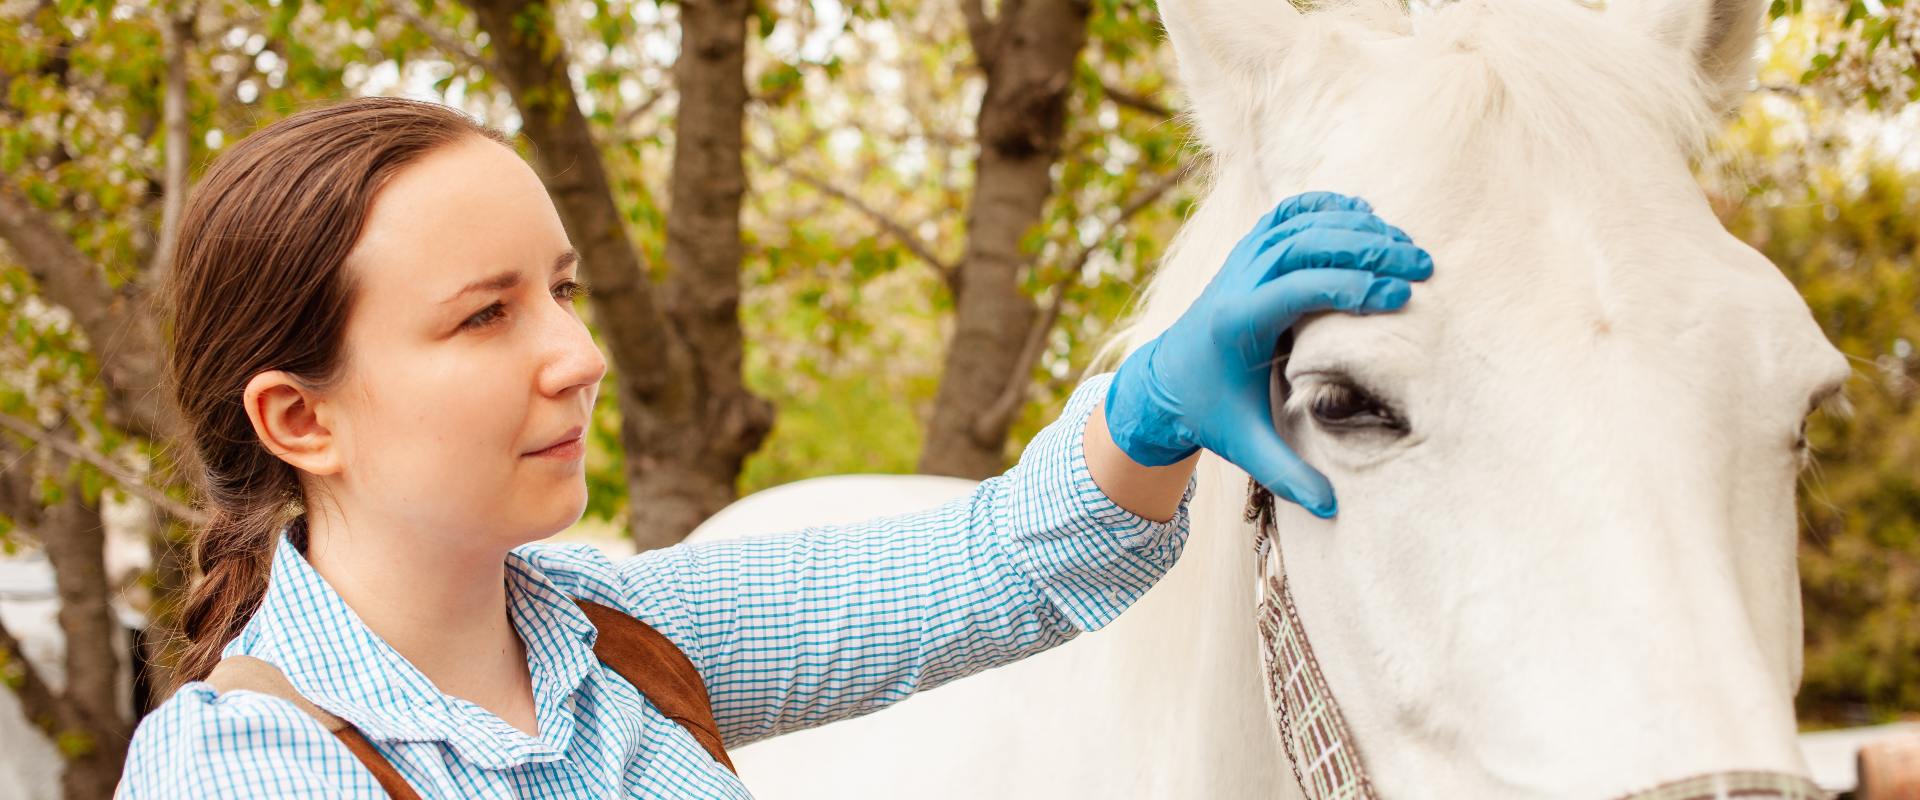 tratamiento medicinal caballo